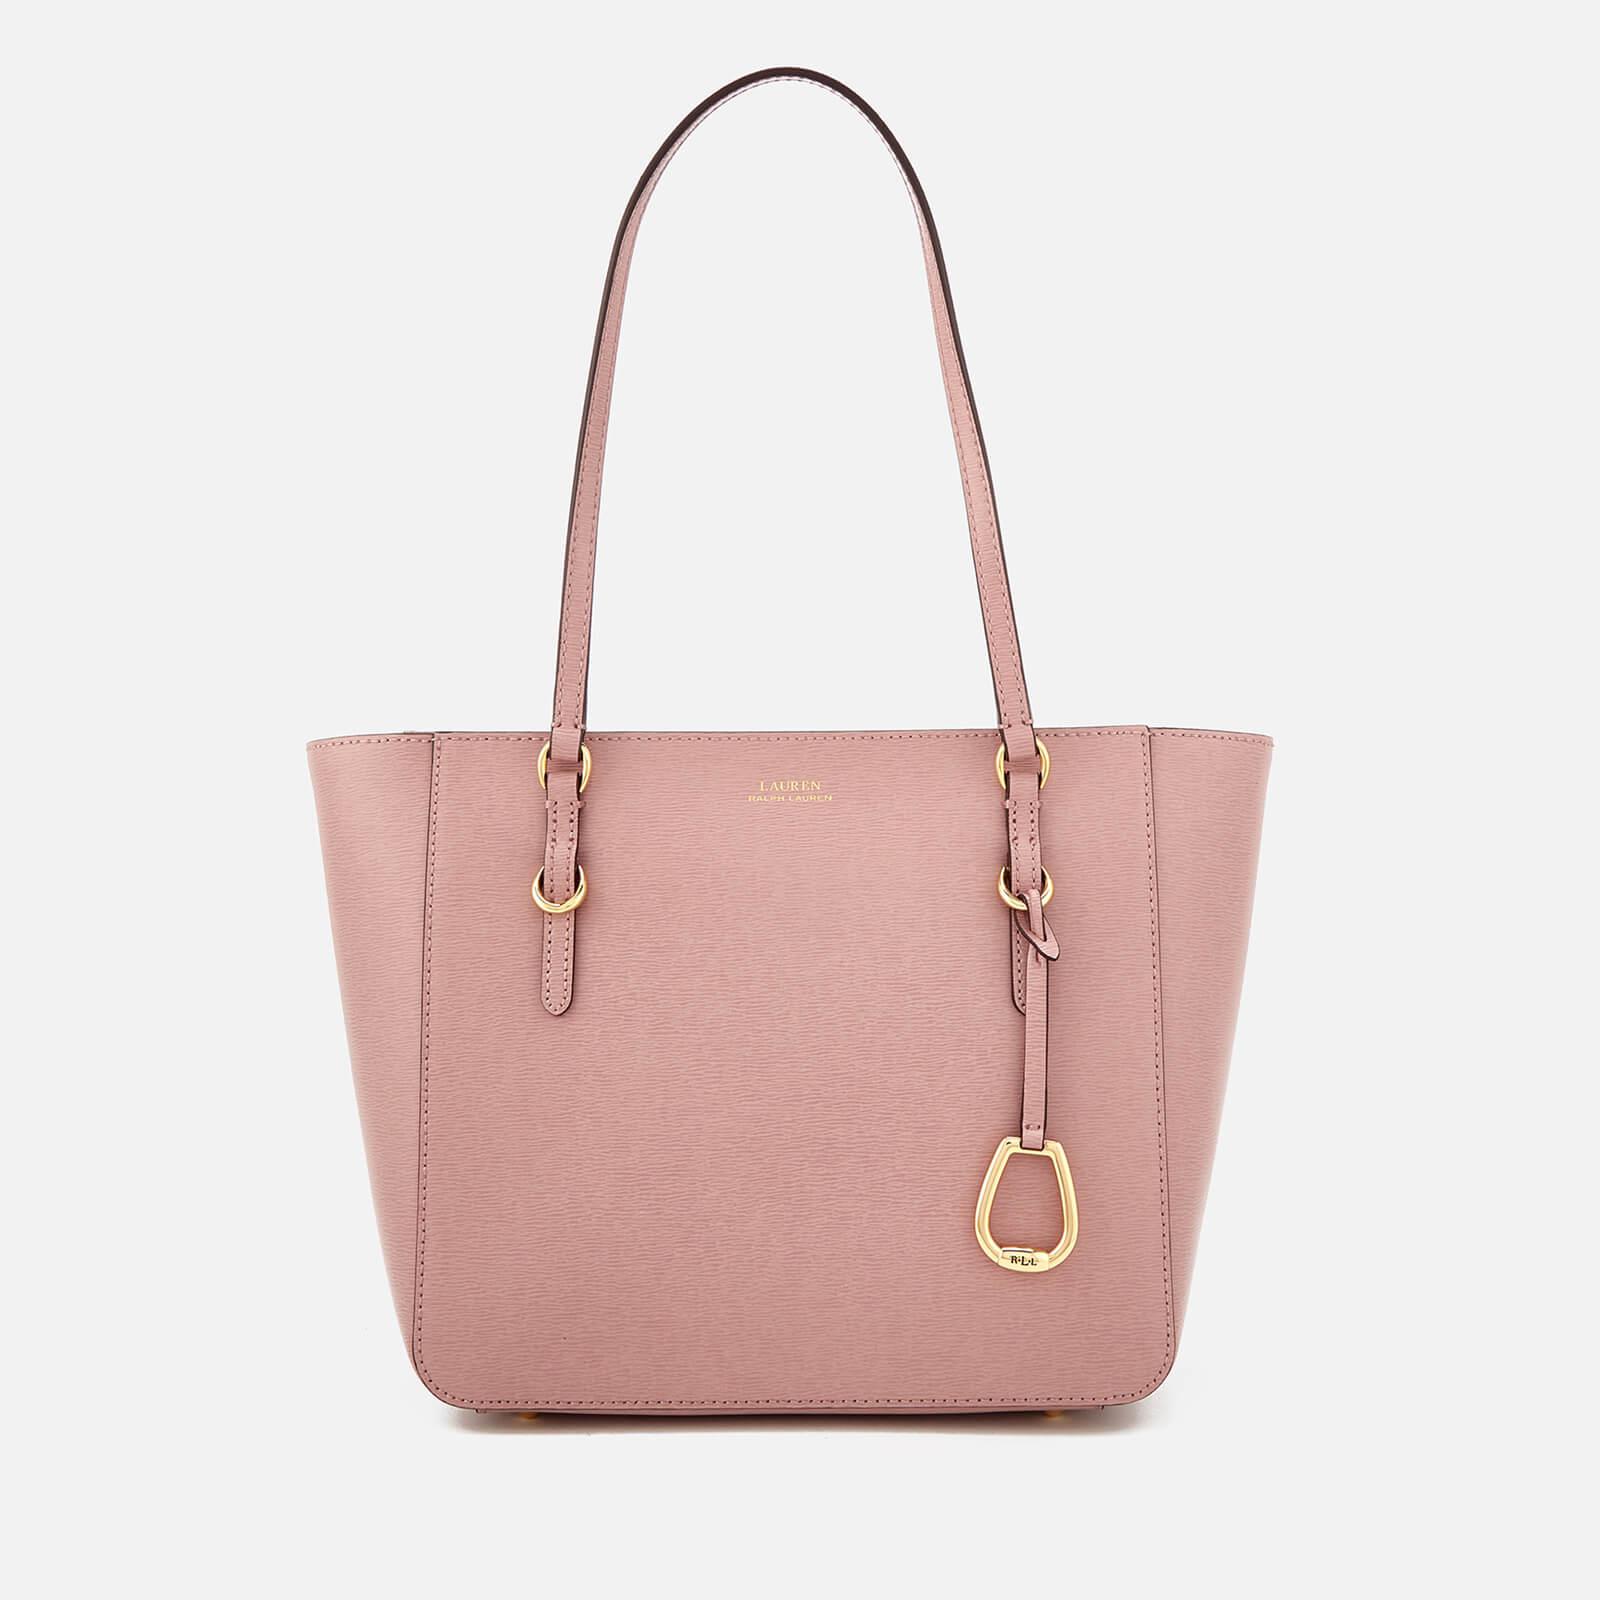 Lauren by Ralph Lauren Leather Bennington Shopper Bag in Pink - Lyst